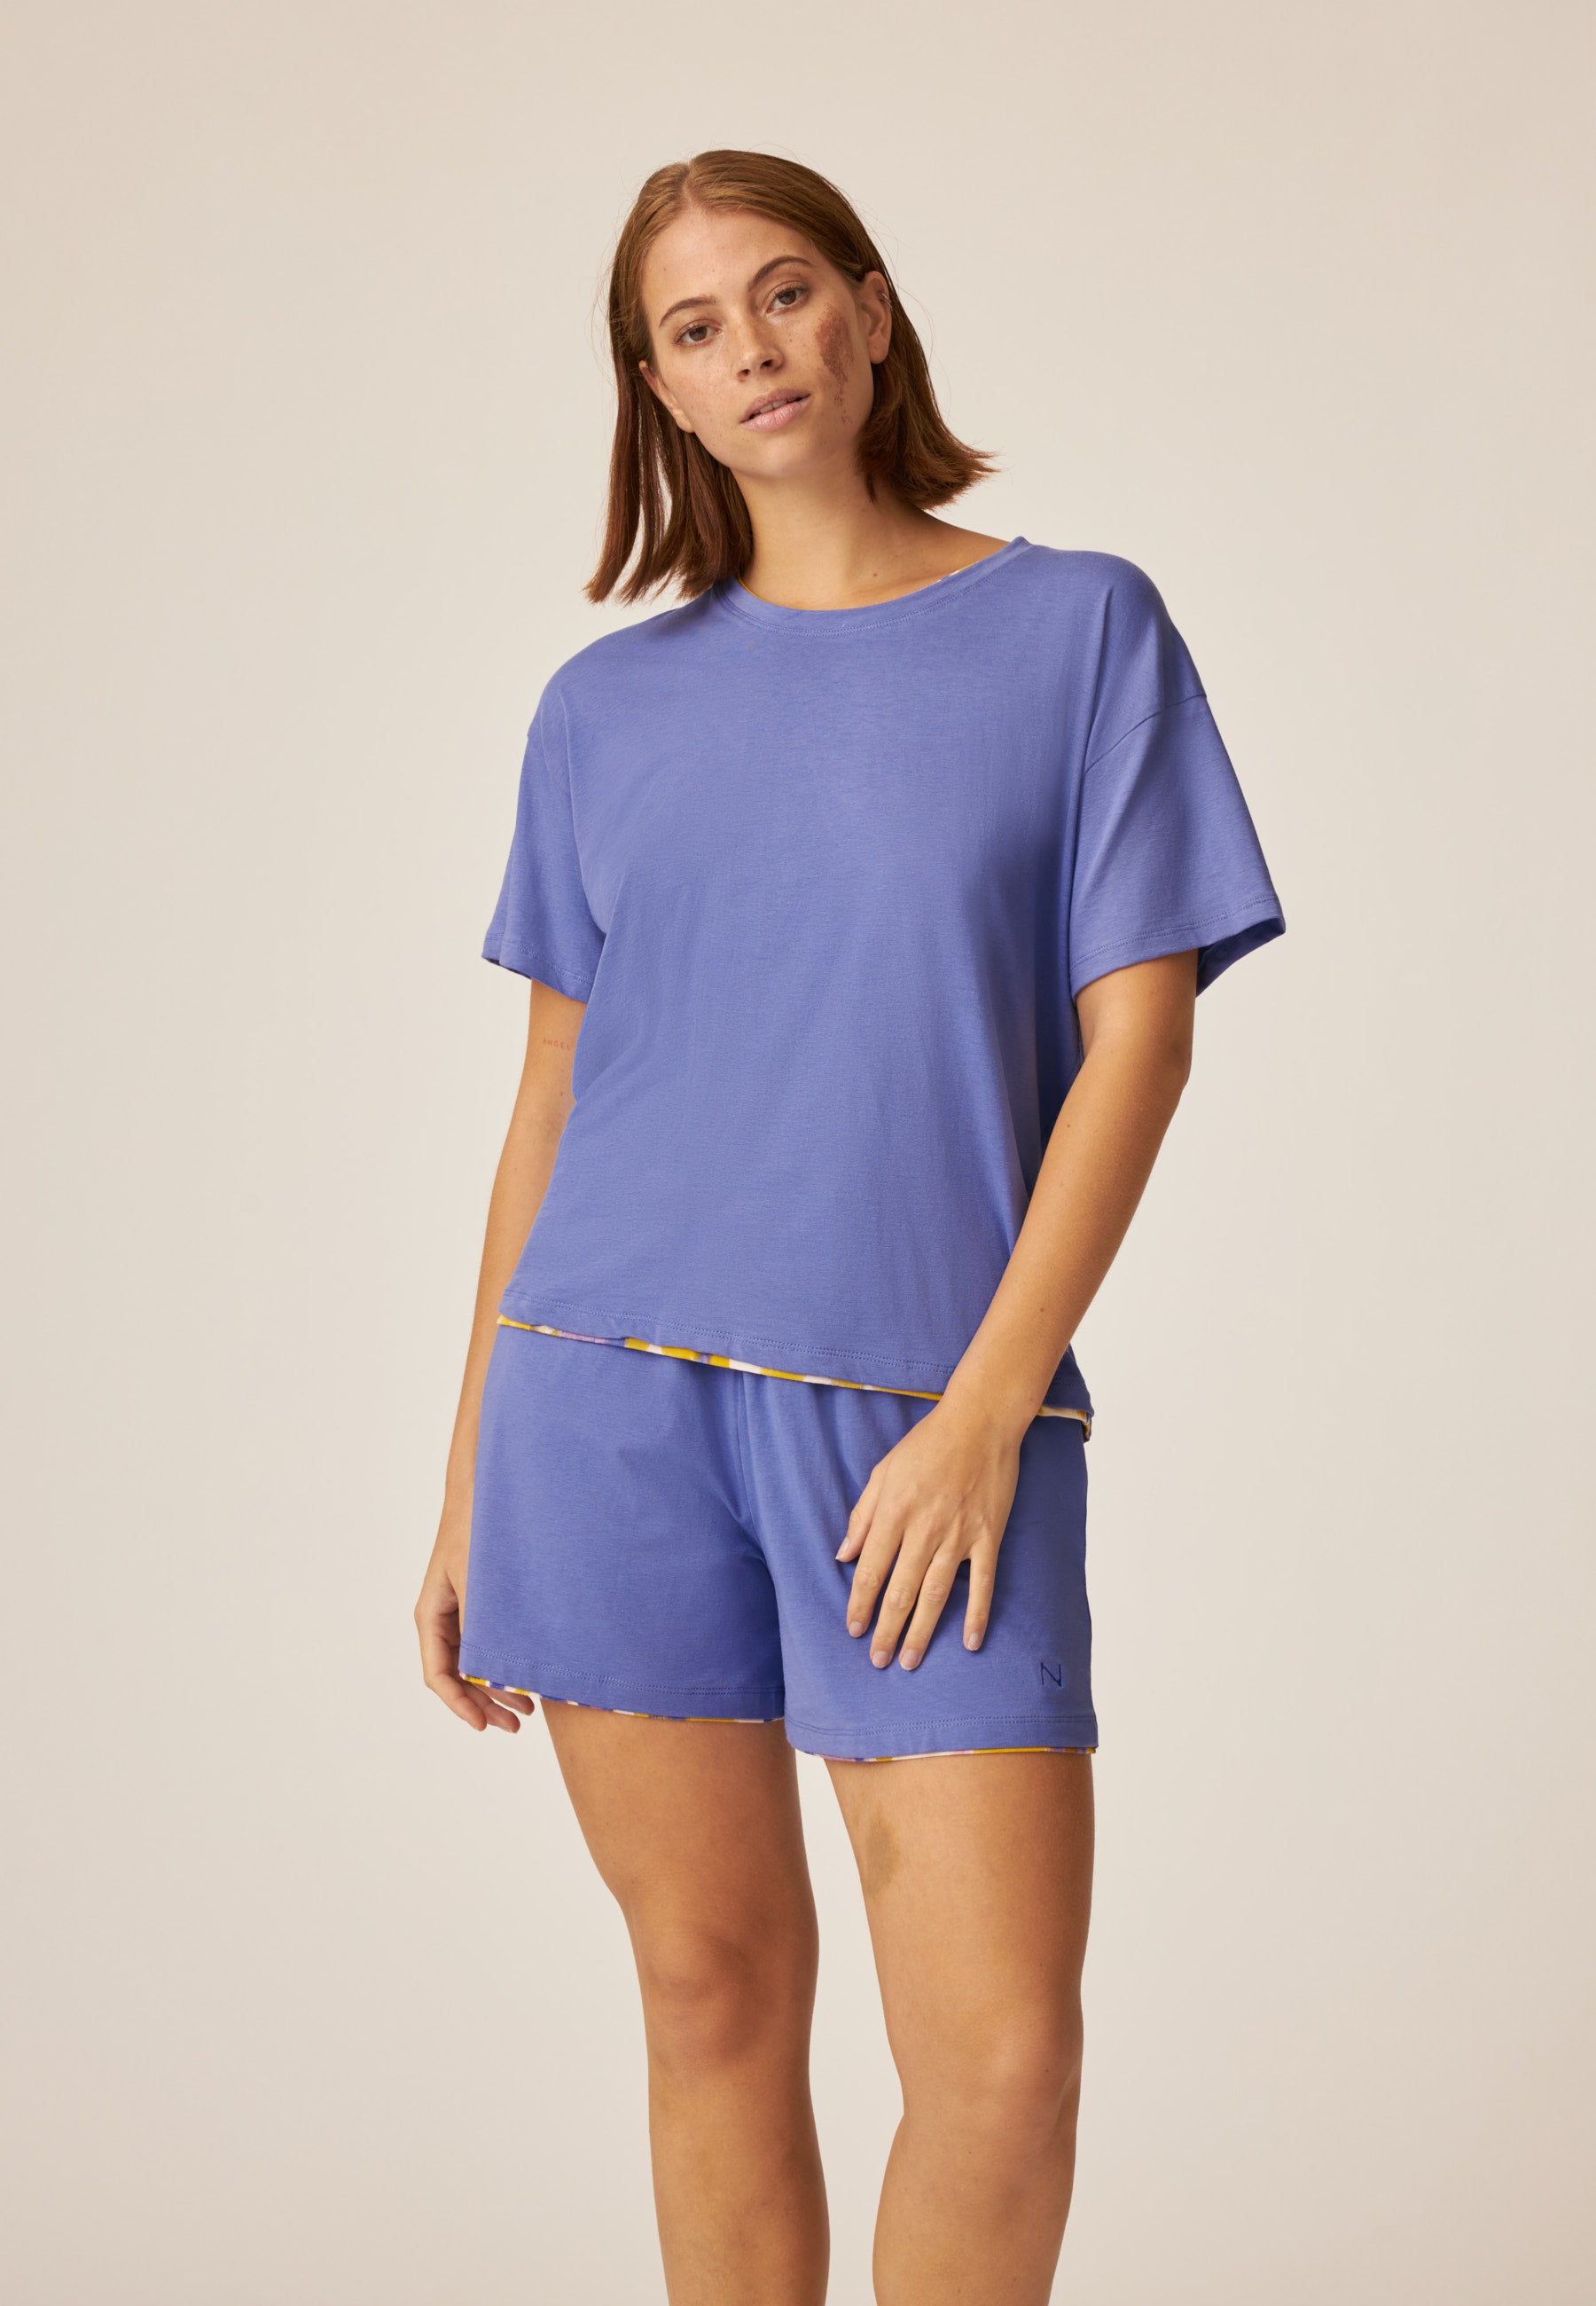 Short Sleeve Shirt - Cotton Candy - Peaceful Blue